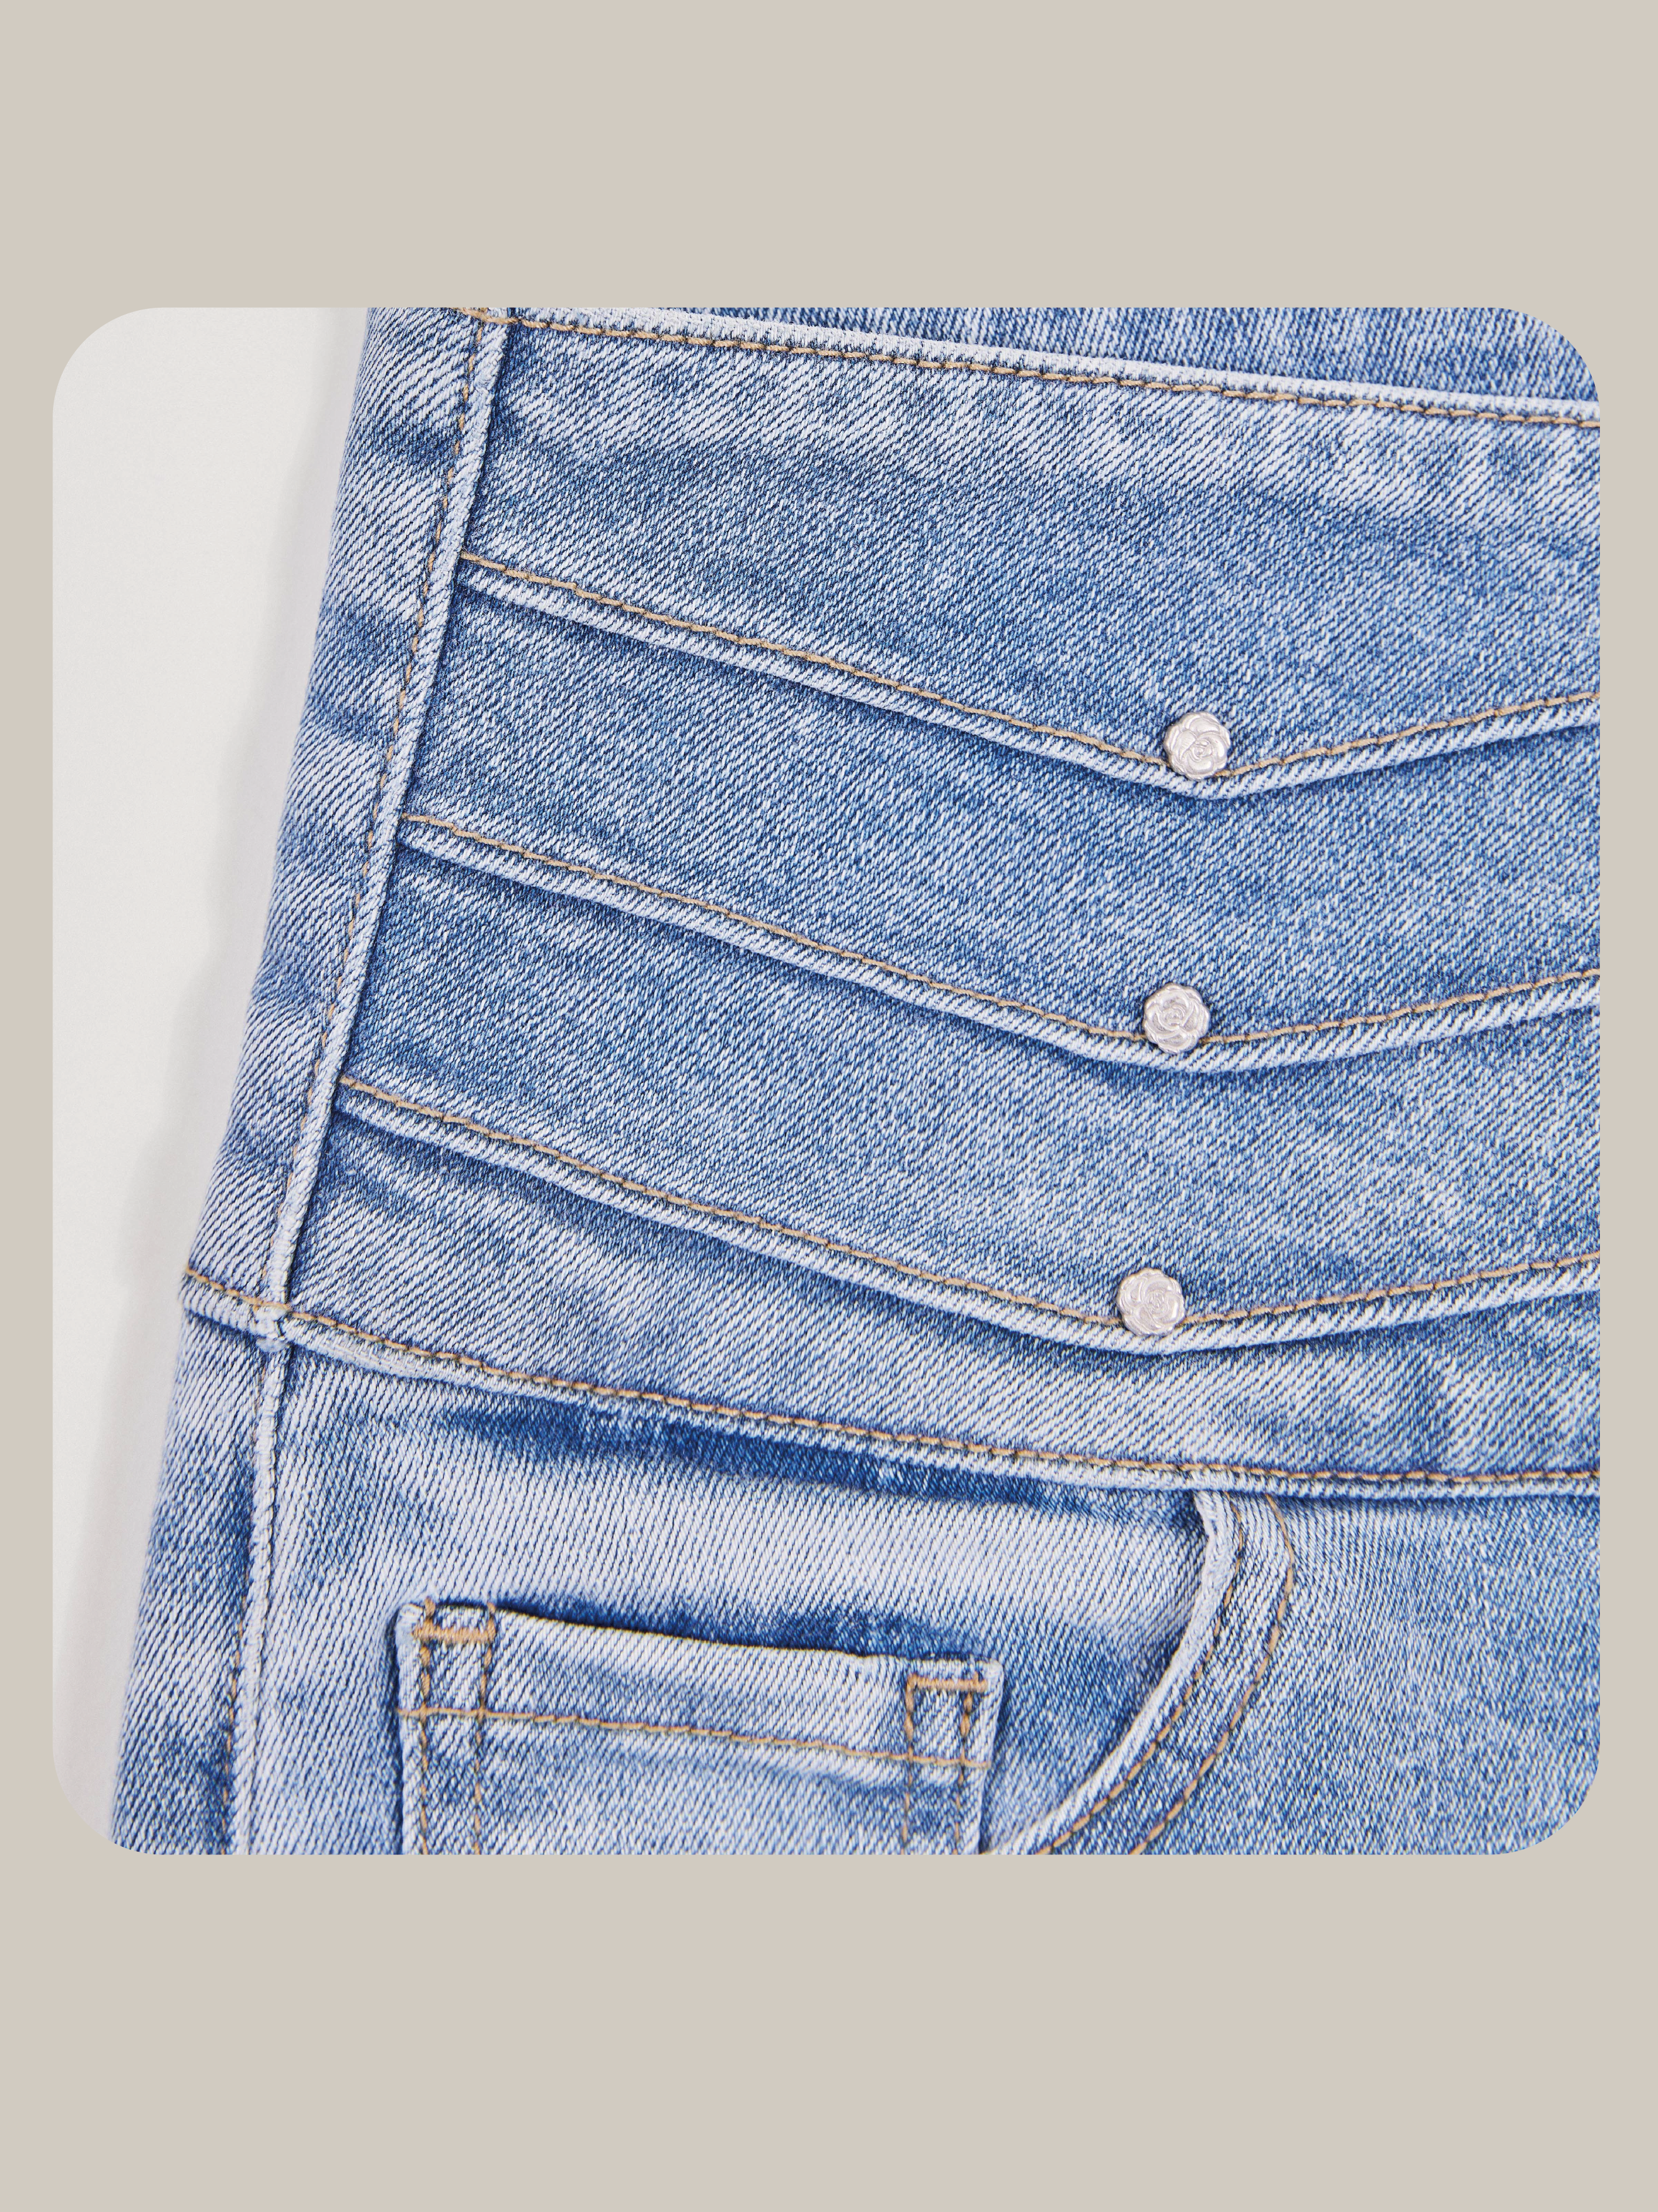 Vintage High-Waisted Stretch Skinny Jeans